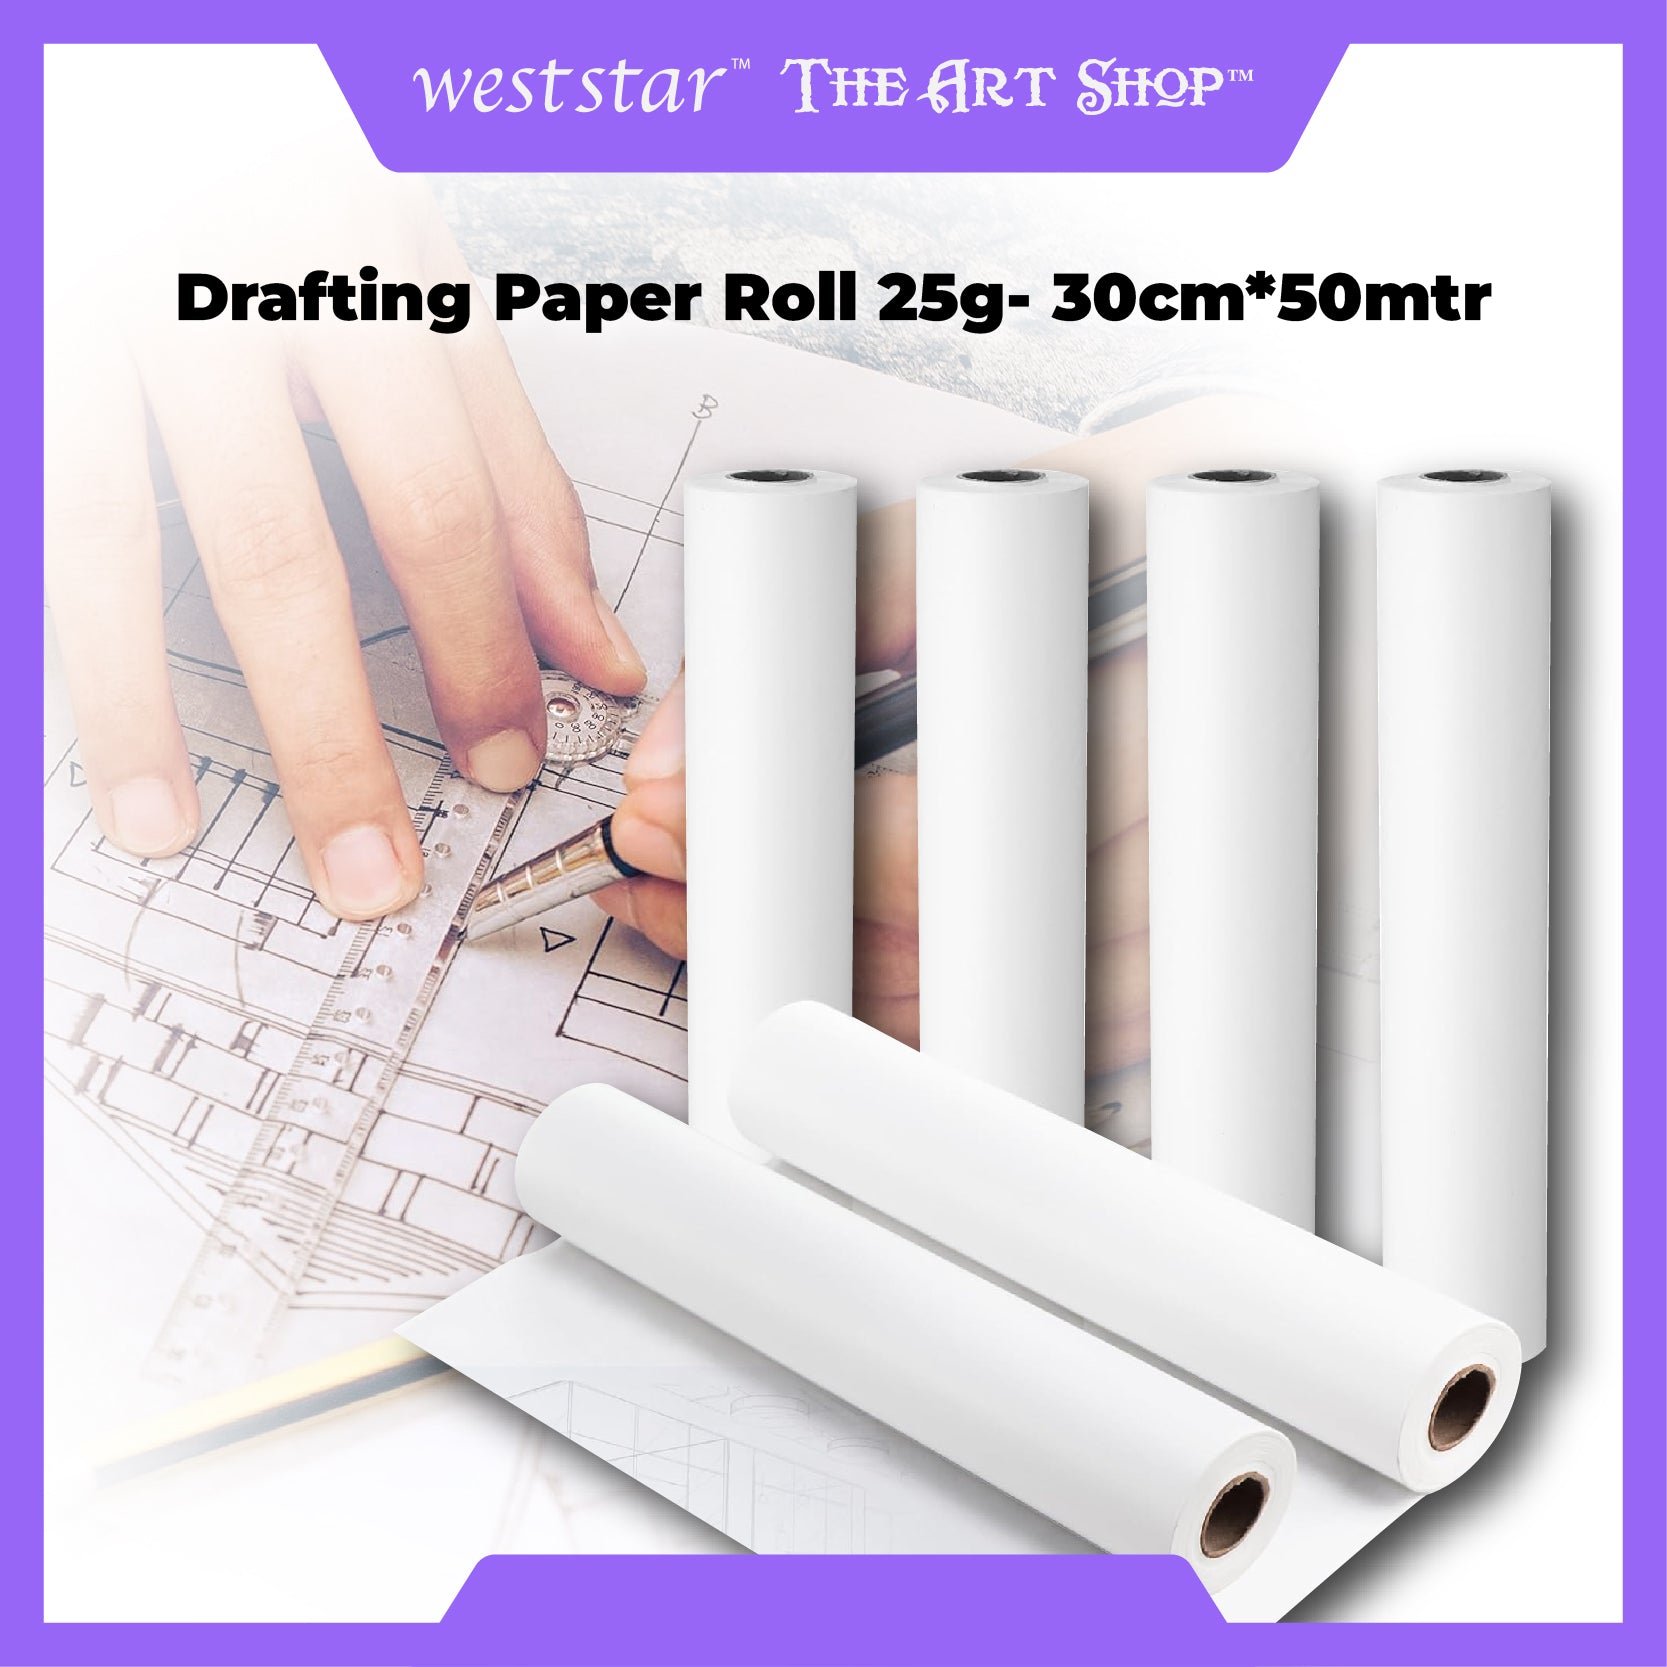 [WESTSTAR] Drafting Paper Roll 25g- 30cm*50mtr